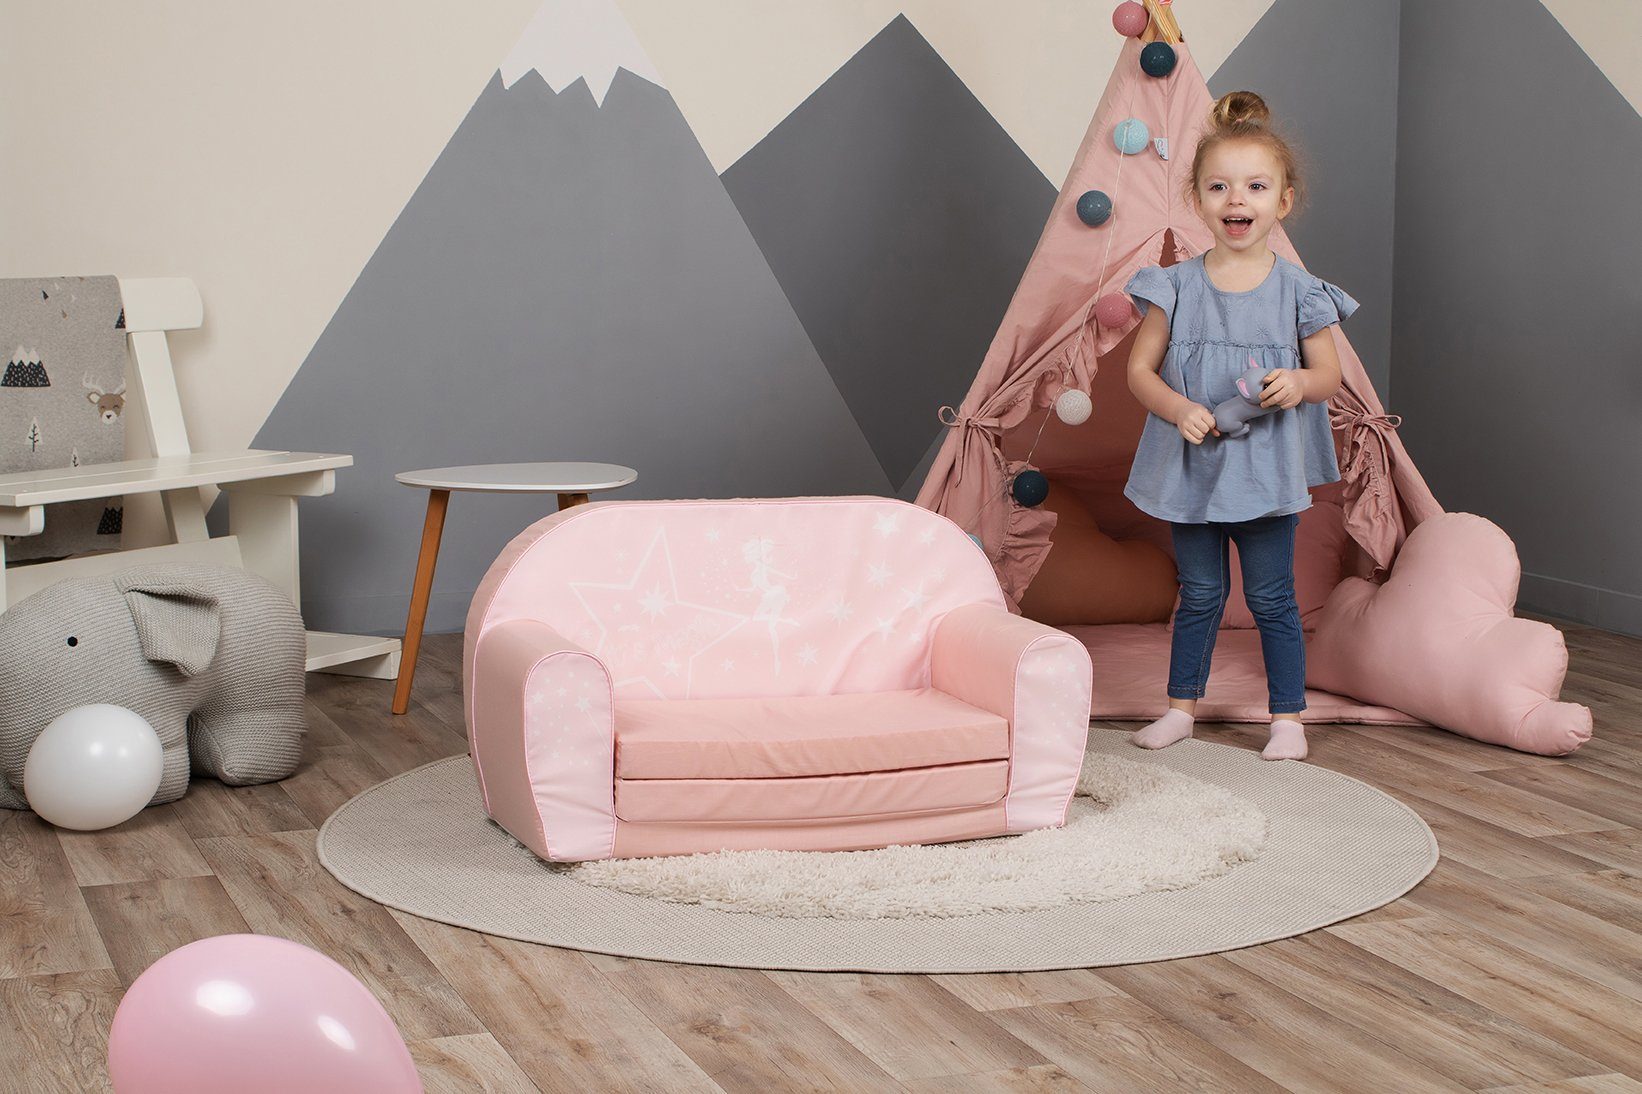 Knorrtoys® Europe in Sofa Kinder; Pink, Fairy für Made